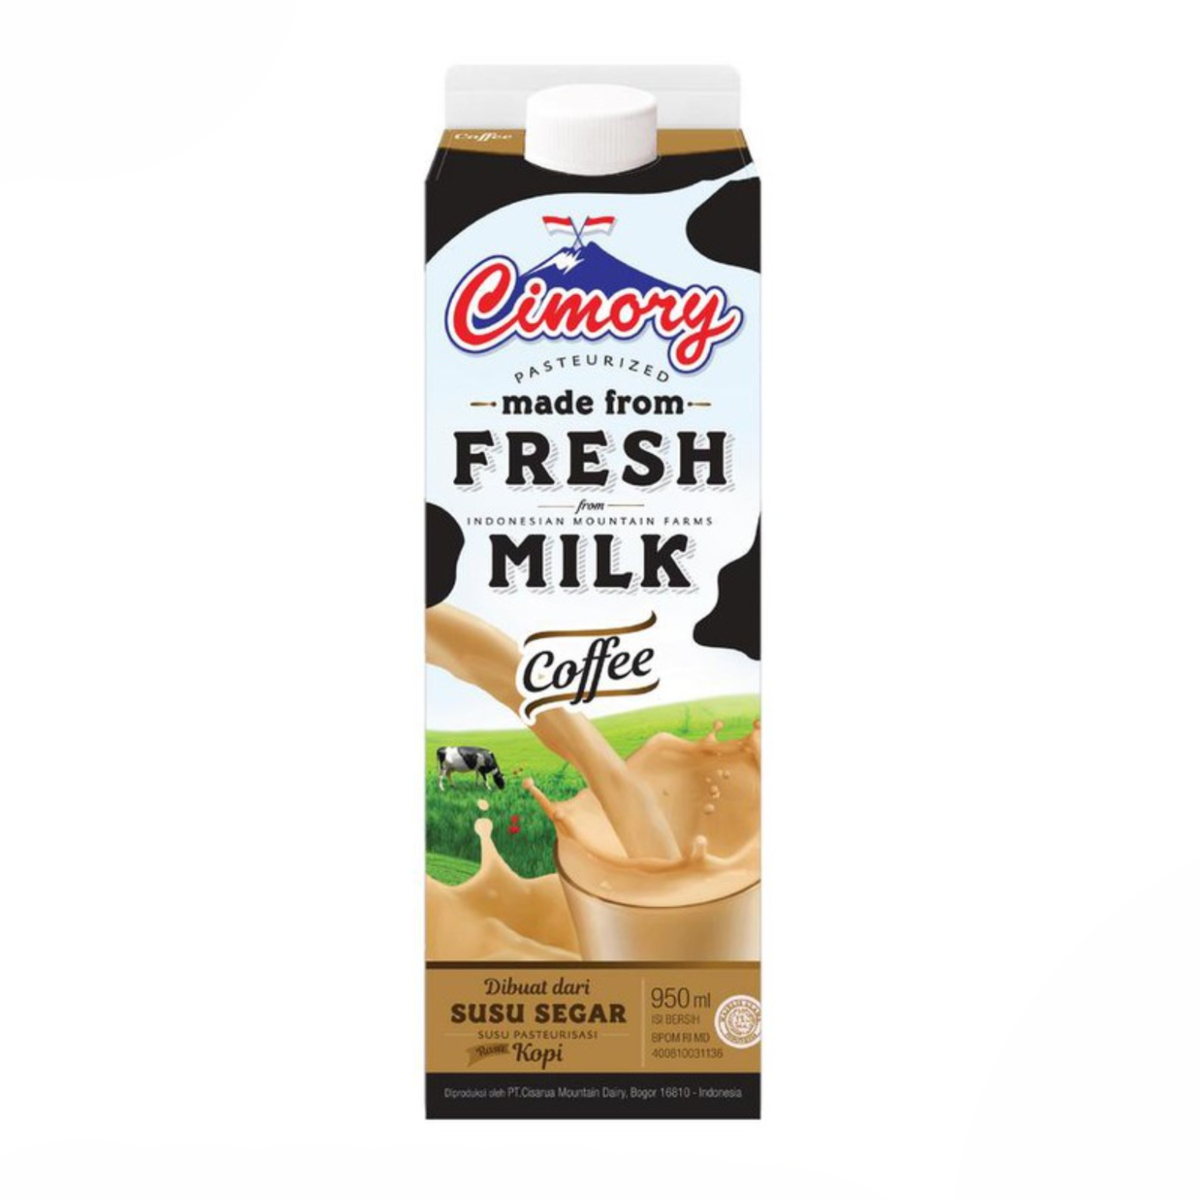 Cimory Fresh Milk Coffee Latte 950ml